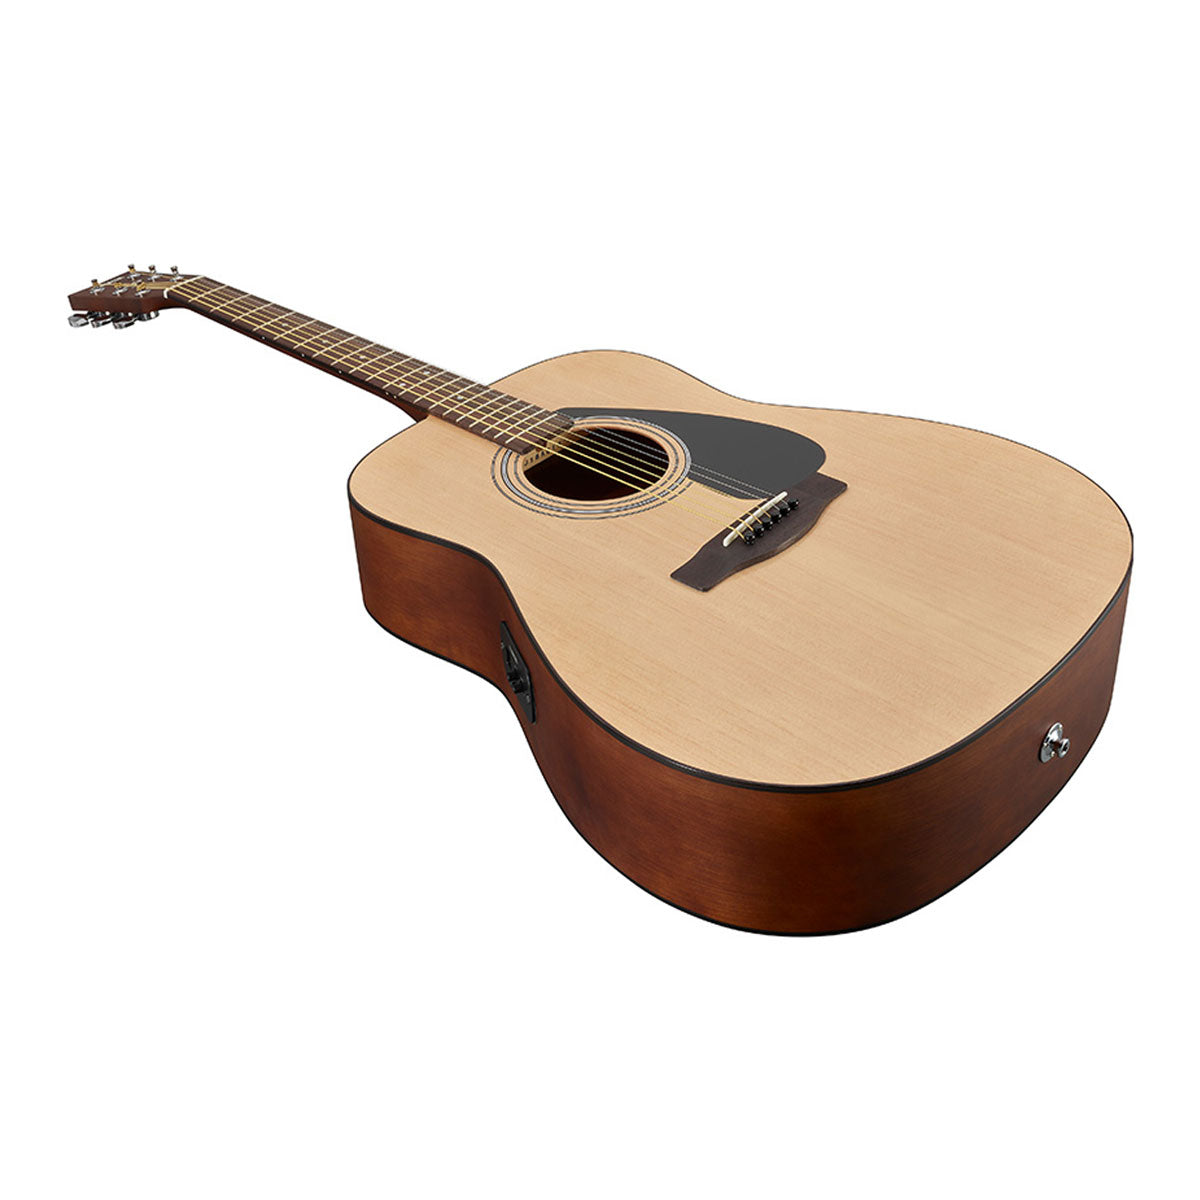 Yamaha FX280 Natural Electro Acoustic Guitar